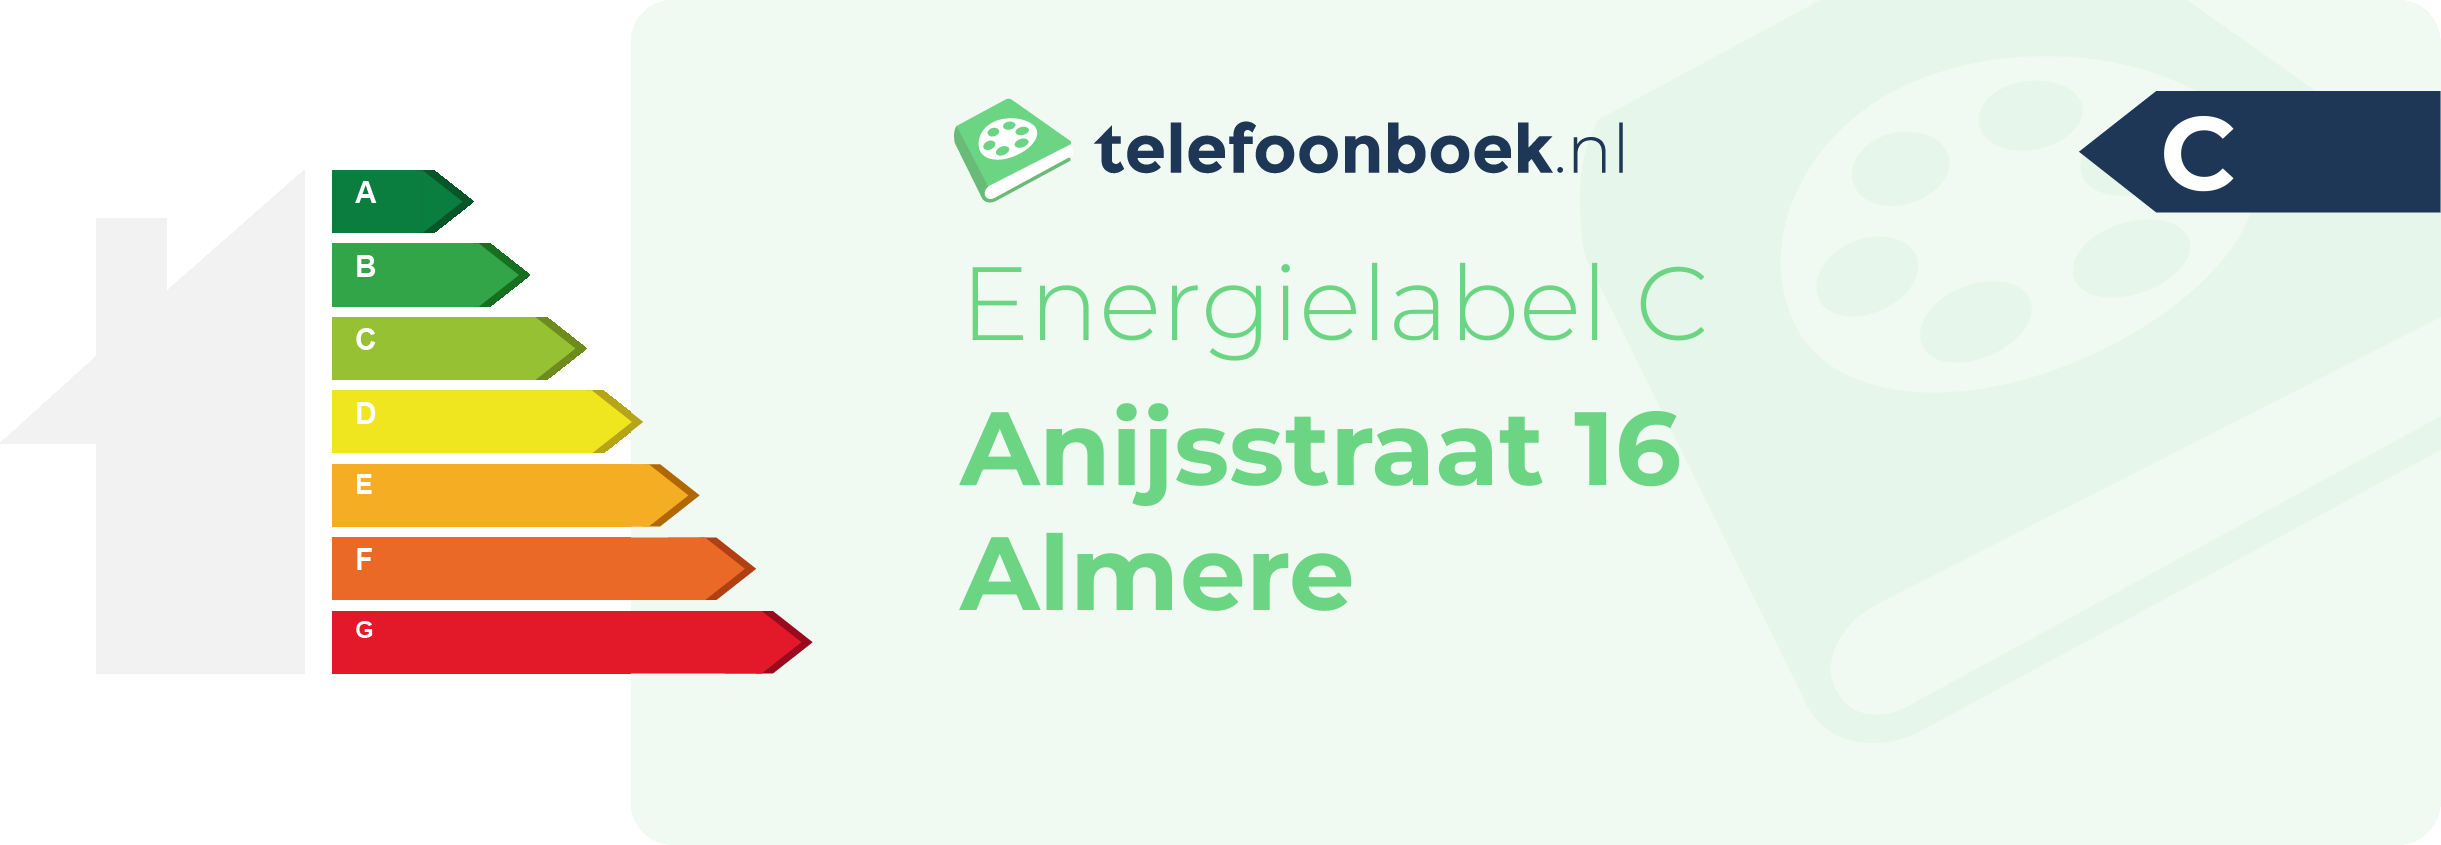 Energielabel Anijsstraat 16 Almere